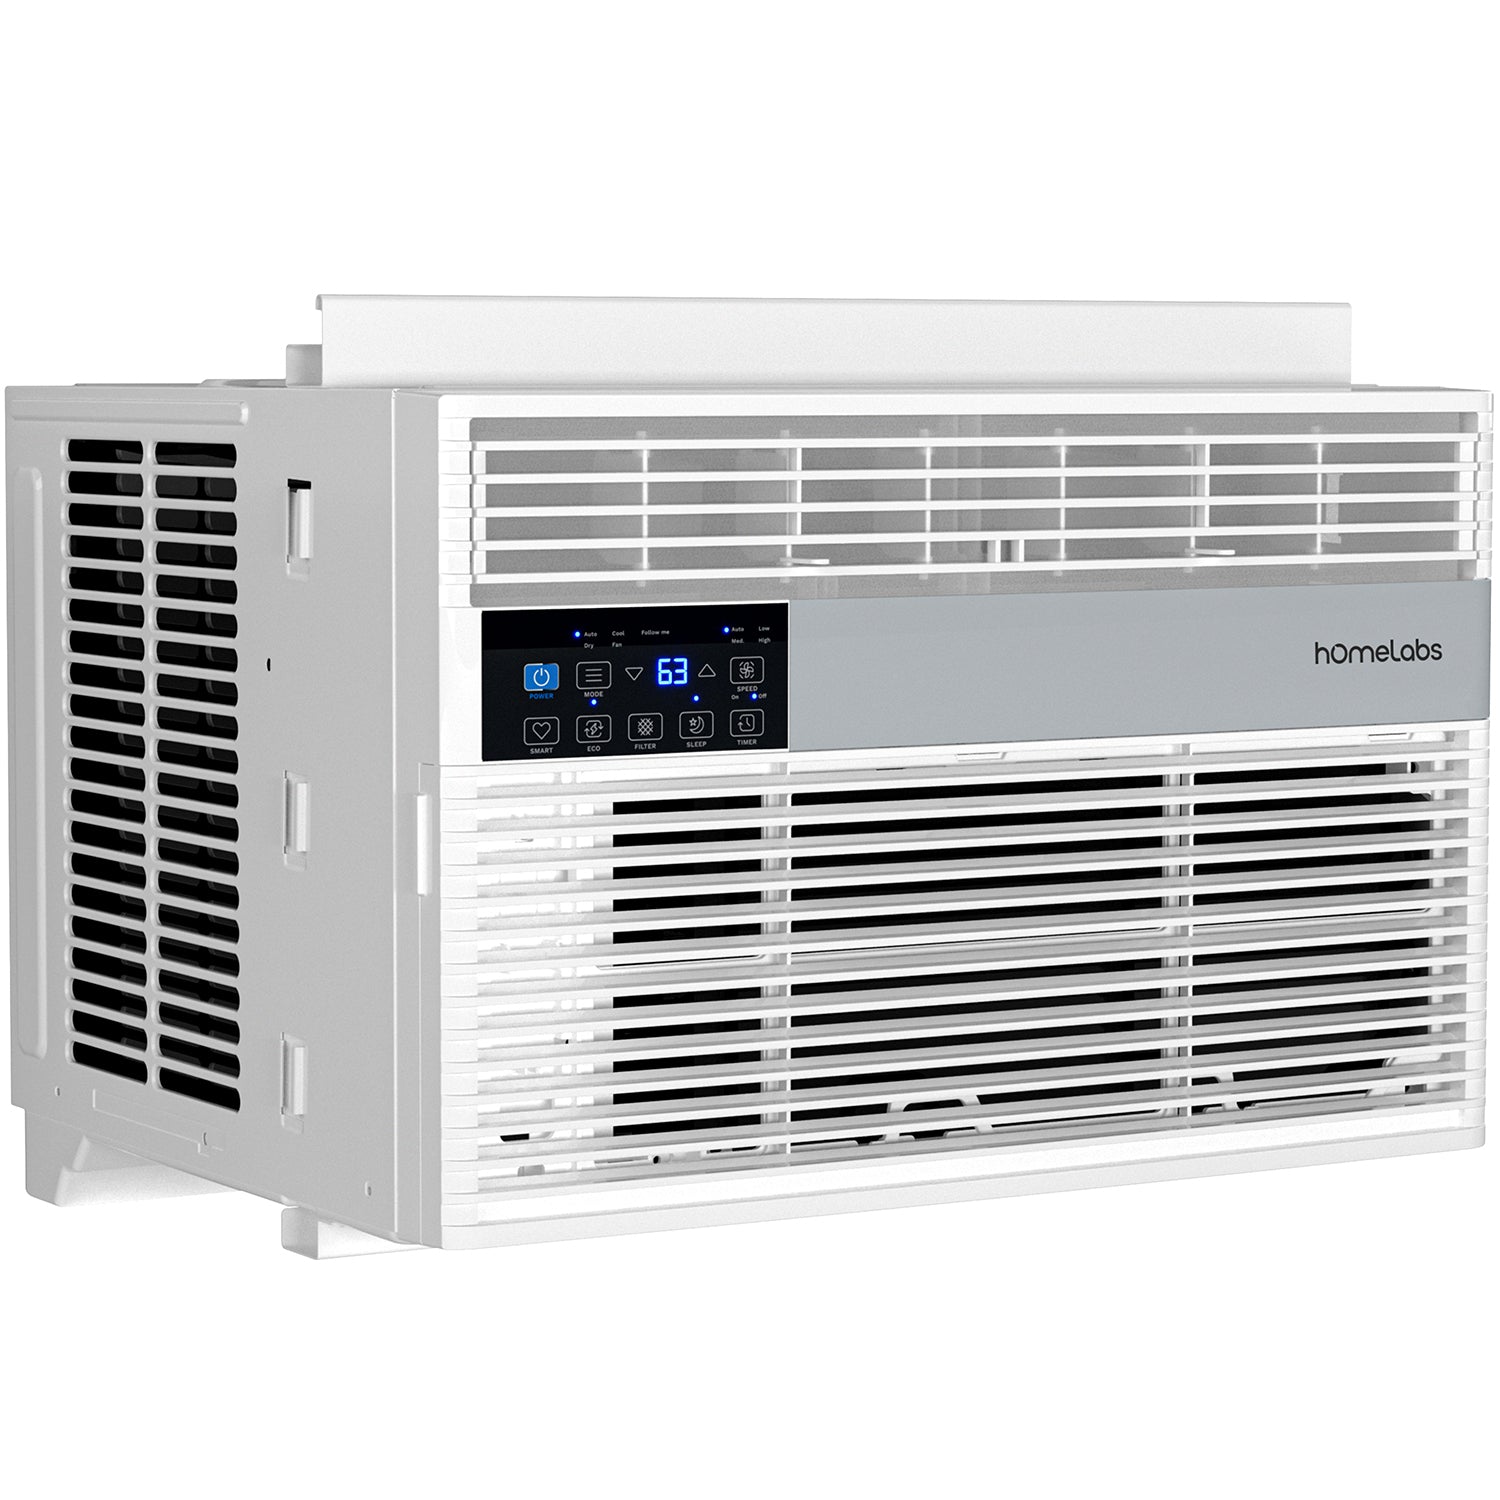 8,000 BTU Wi-Fi Energy Efficient Window Air Conditioner